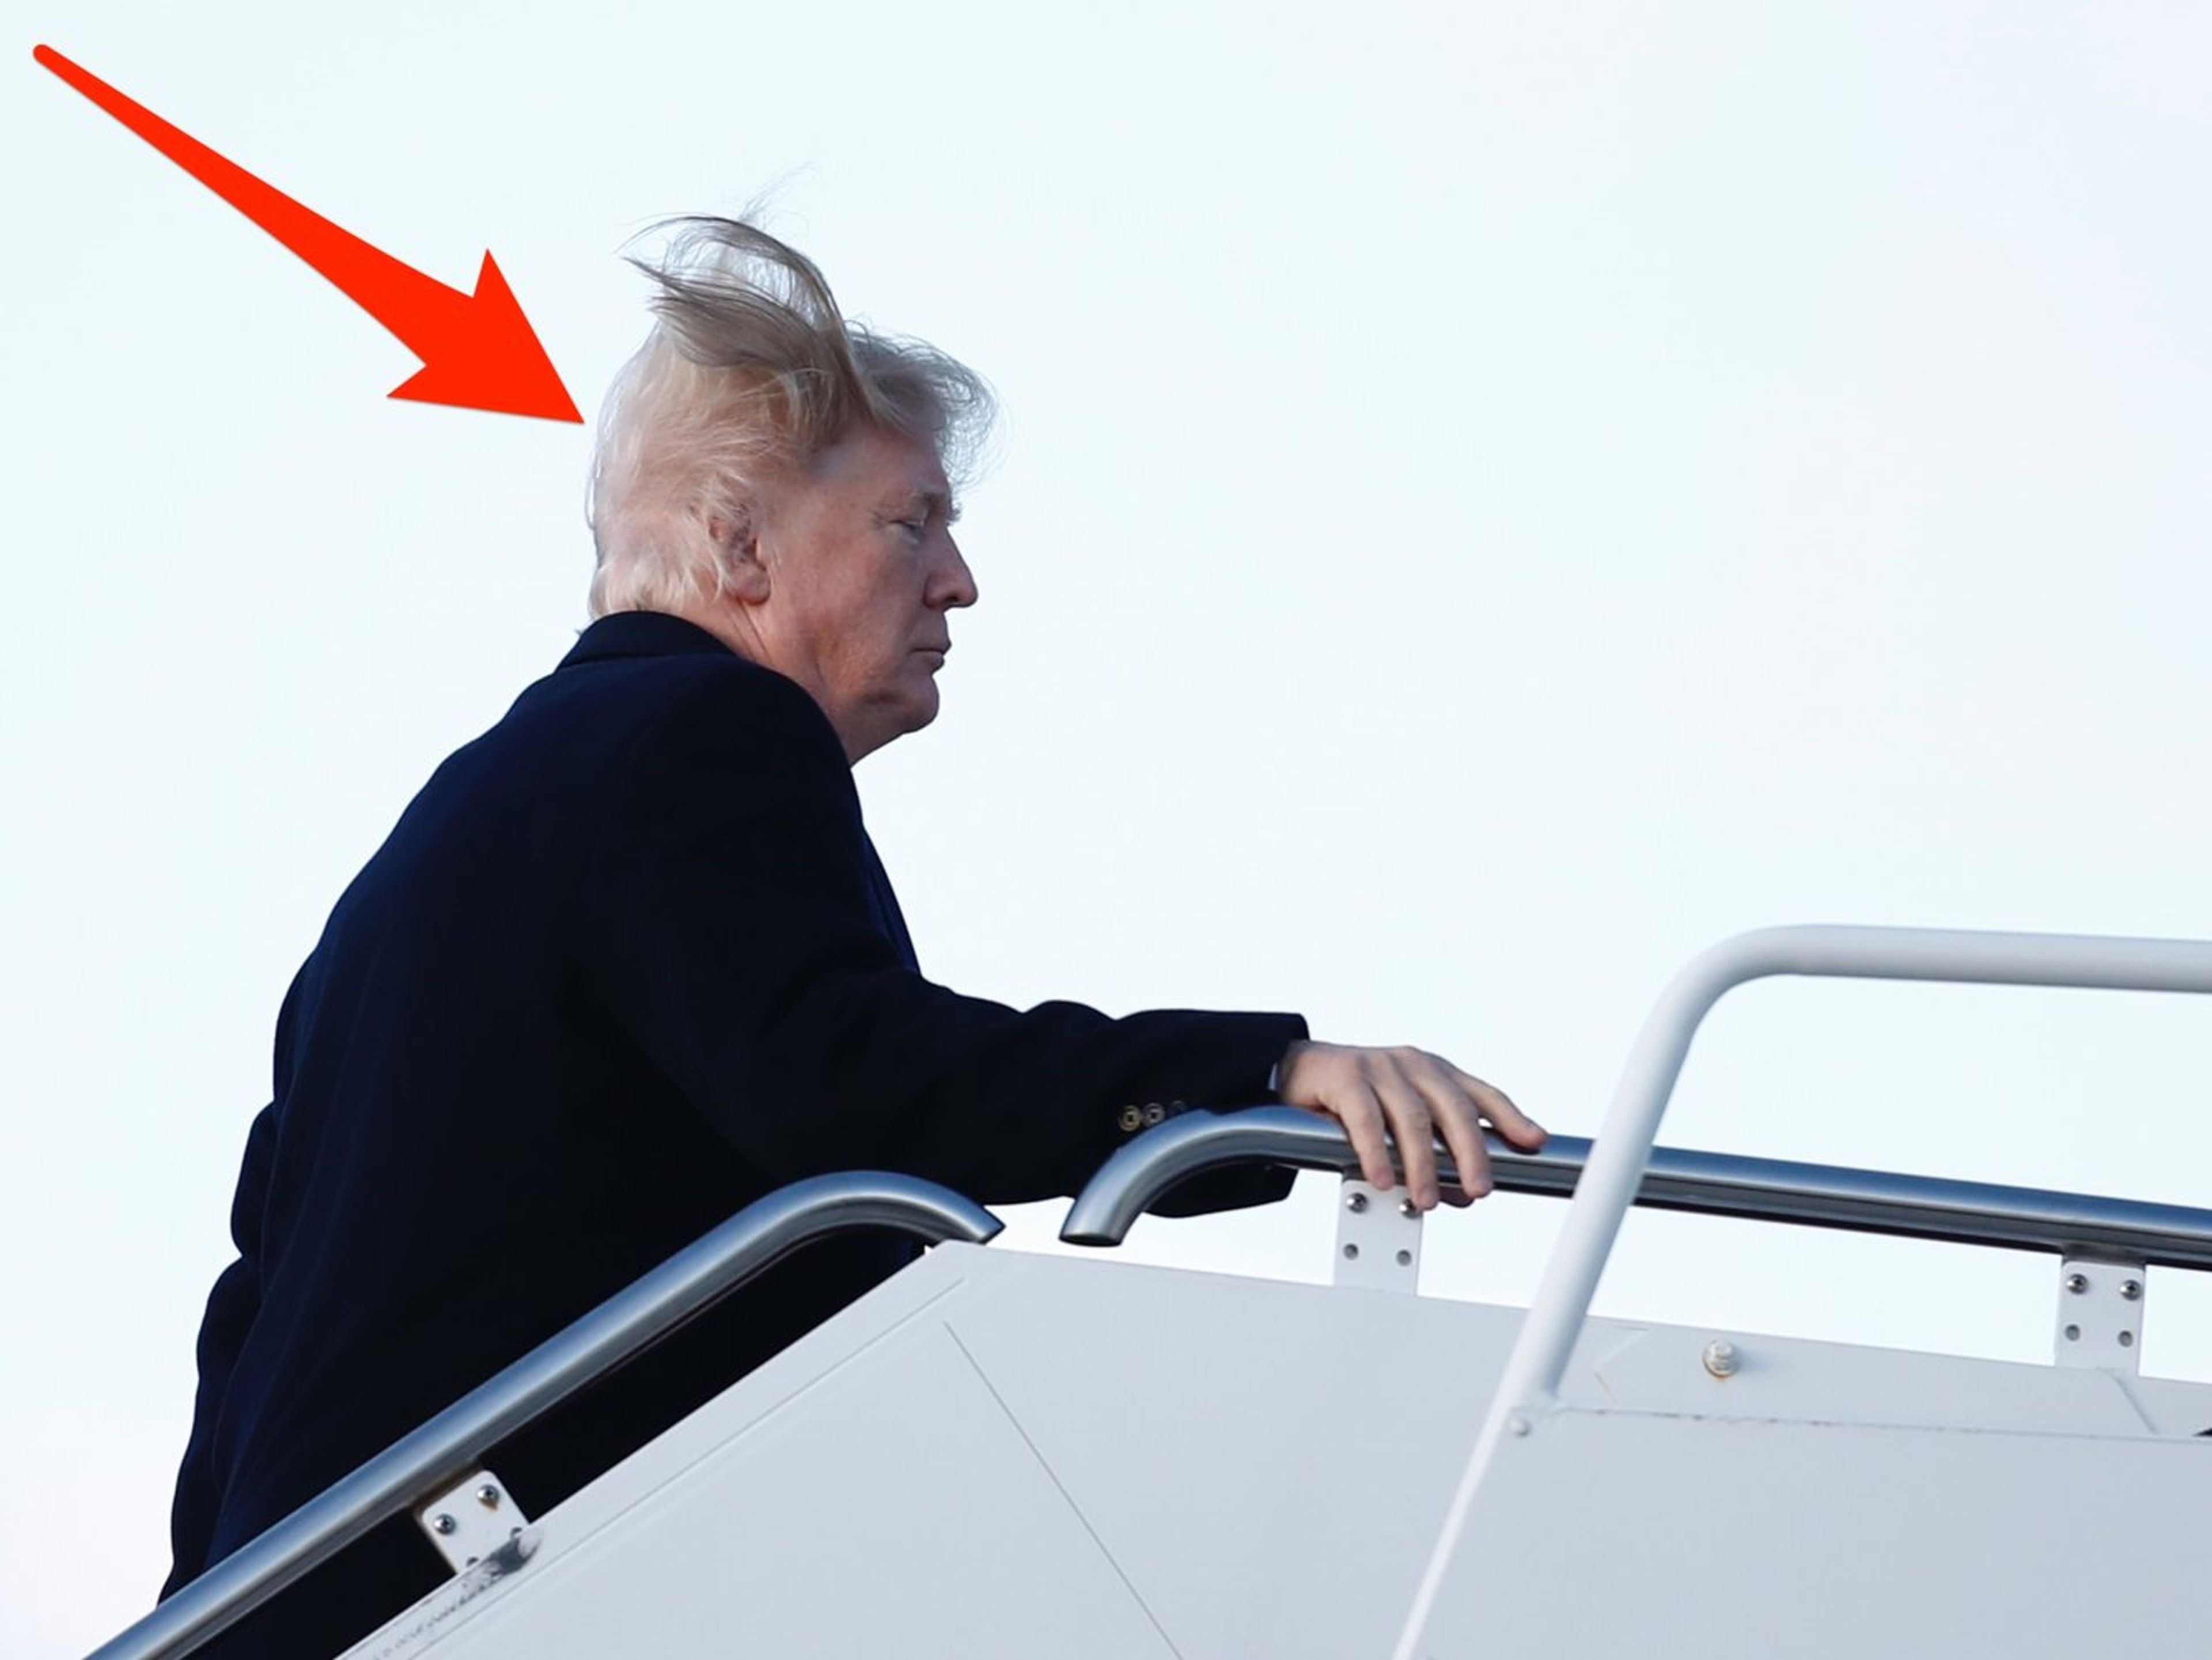 El cabello de Trump a plena vista a principios de febrero.